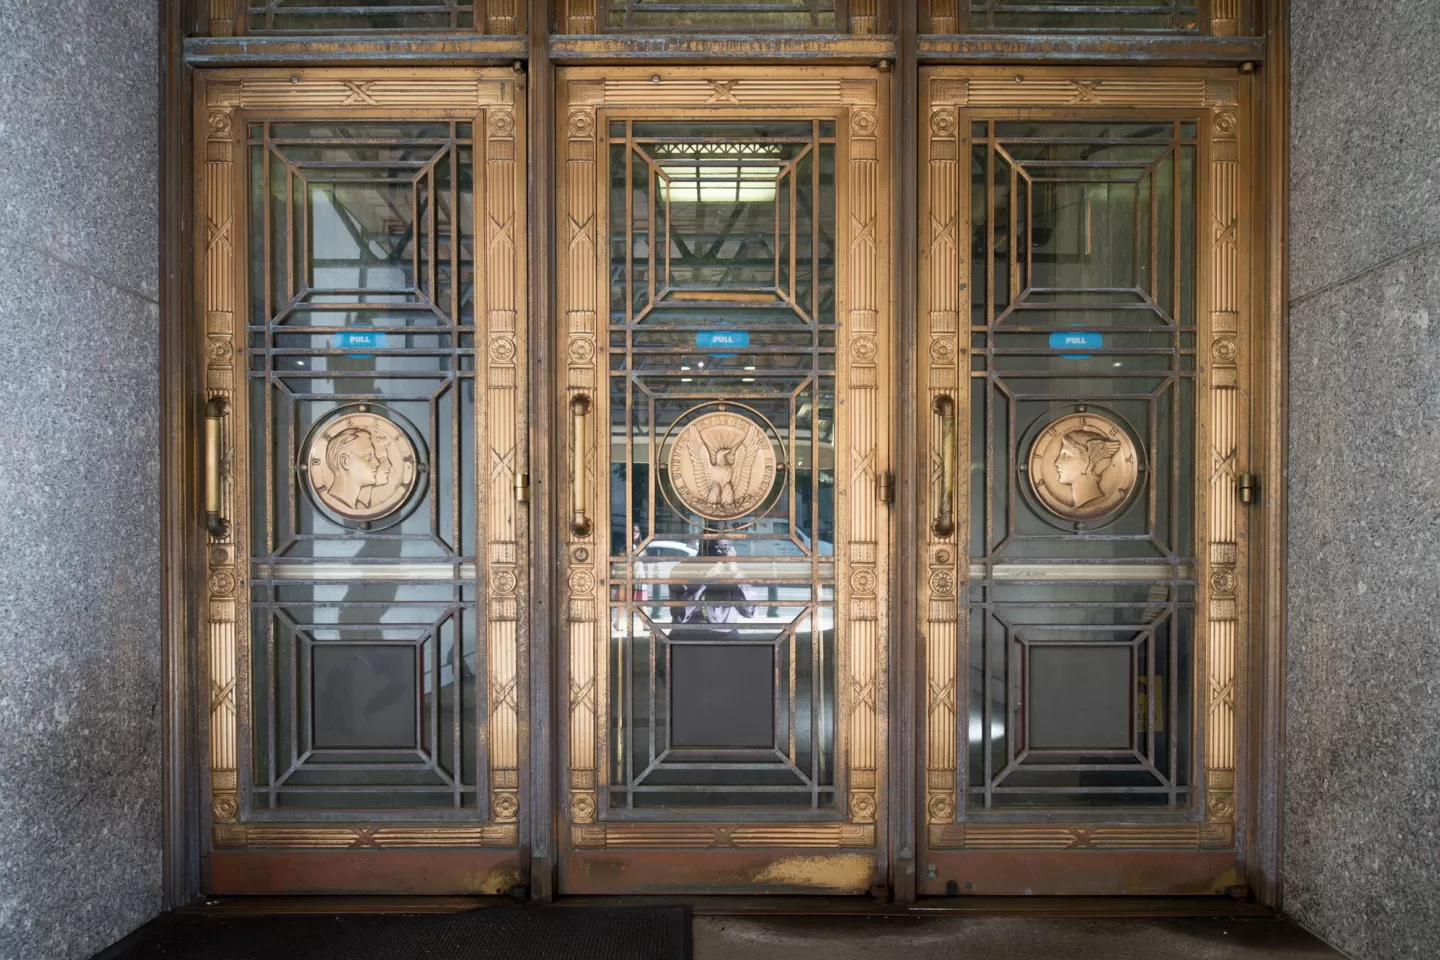 Bronze ornamental doors at the Dirksen Senate Office Building.